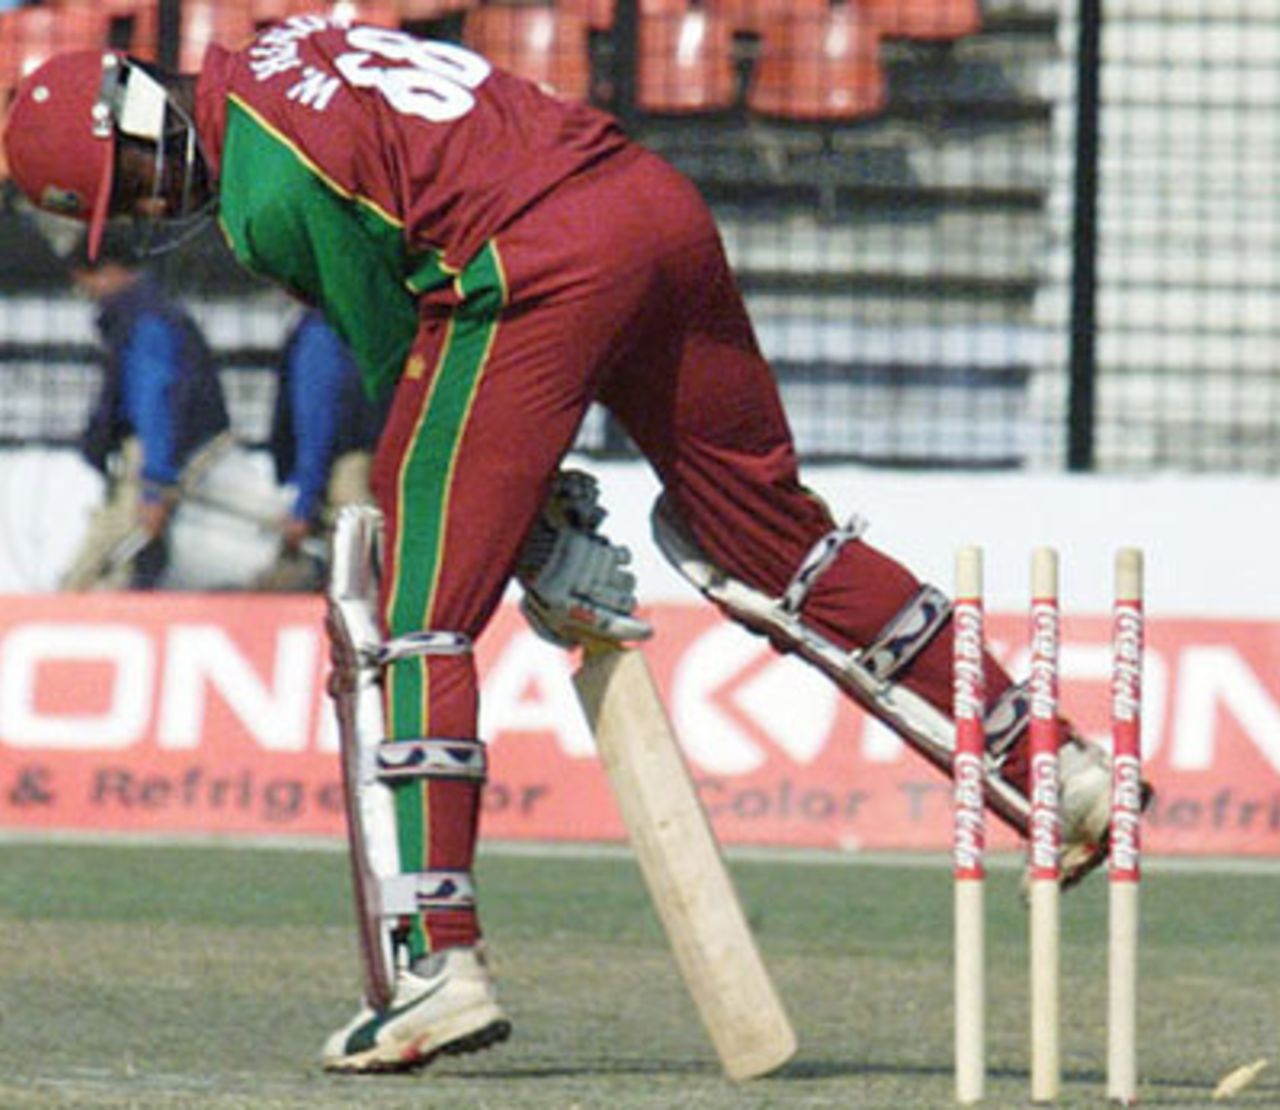 West Indies in Bangladesh, 3rd One Day International, 3 Dec 2002